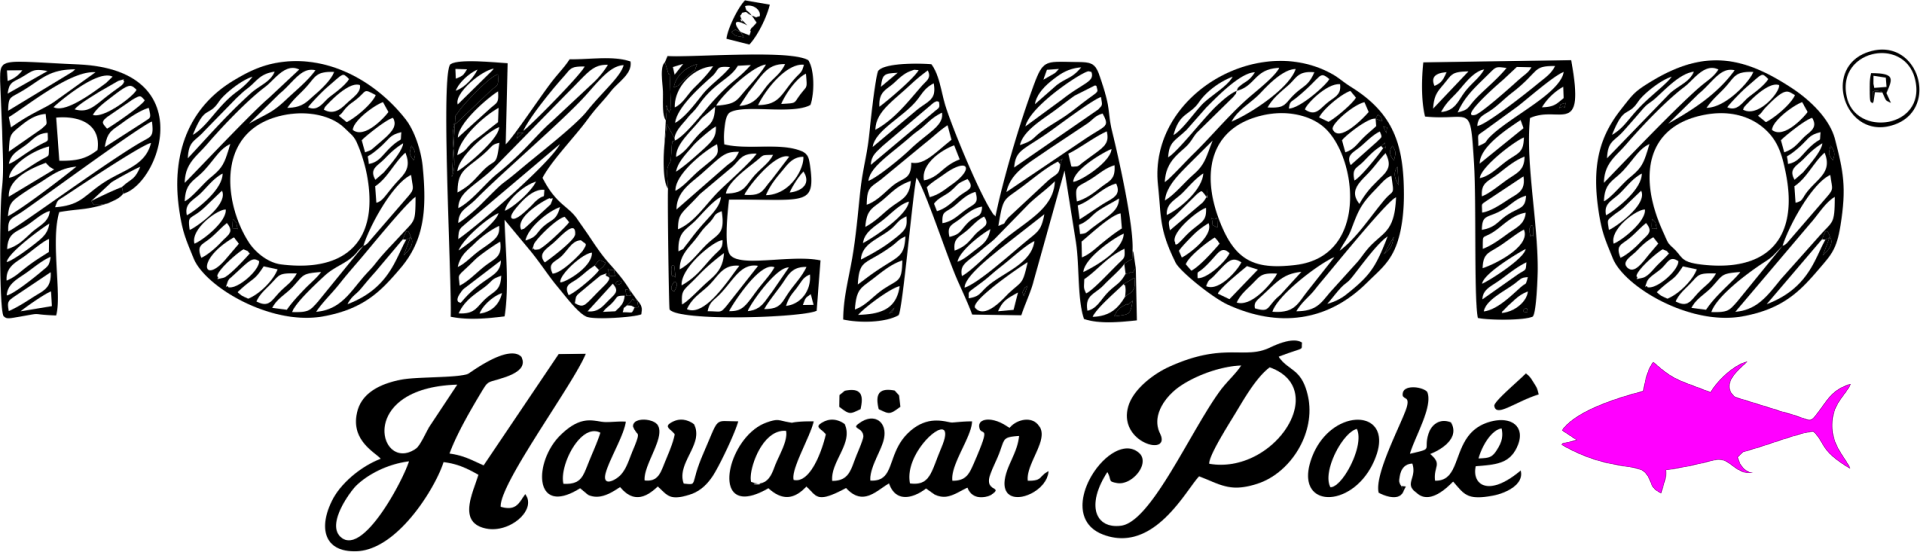 logo-pokemoto-blackfont